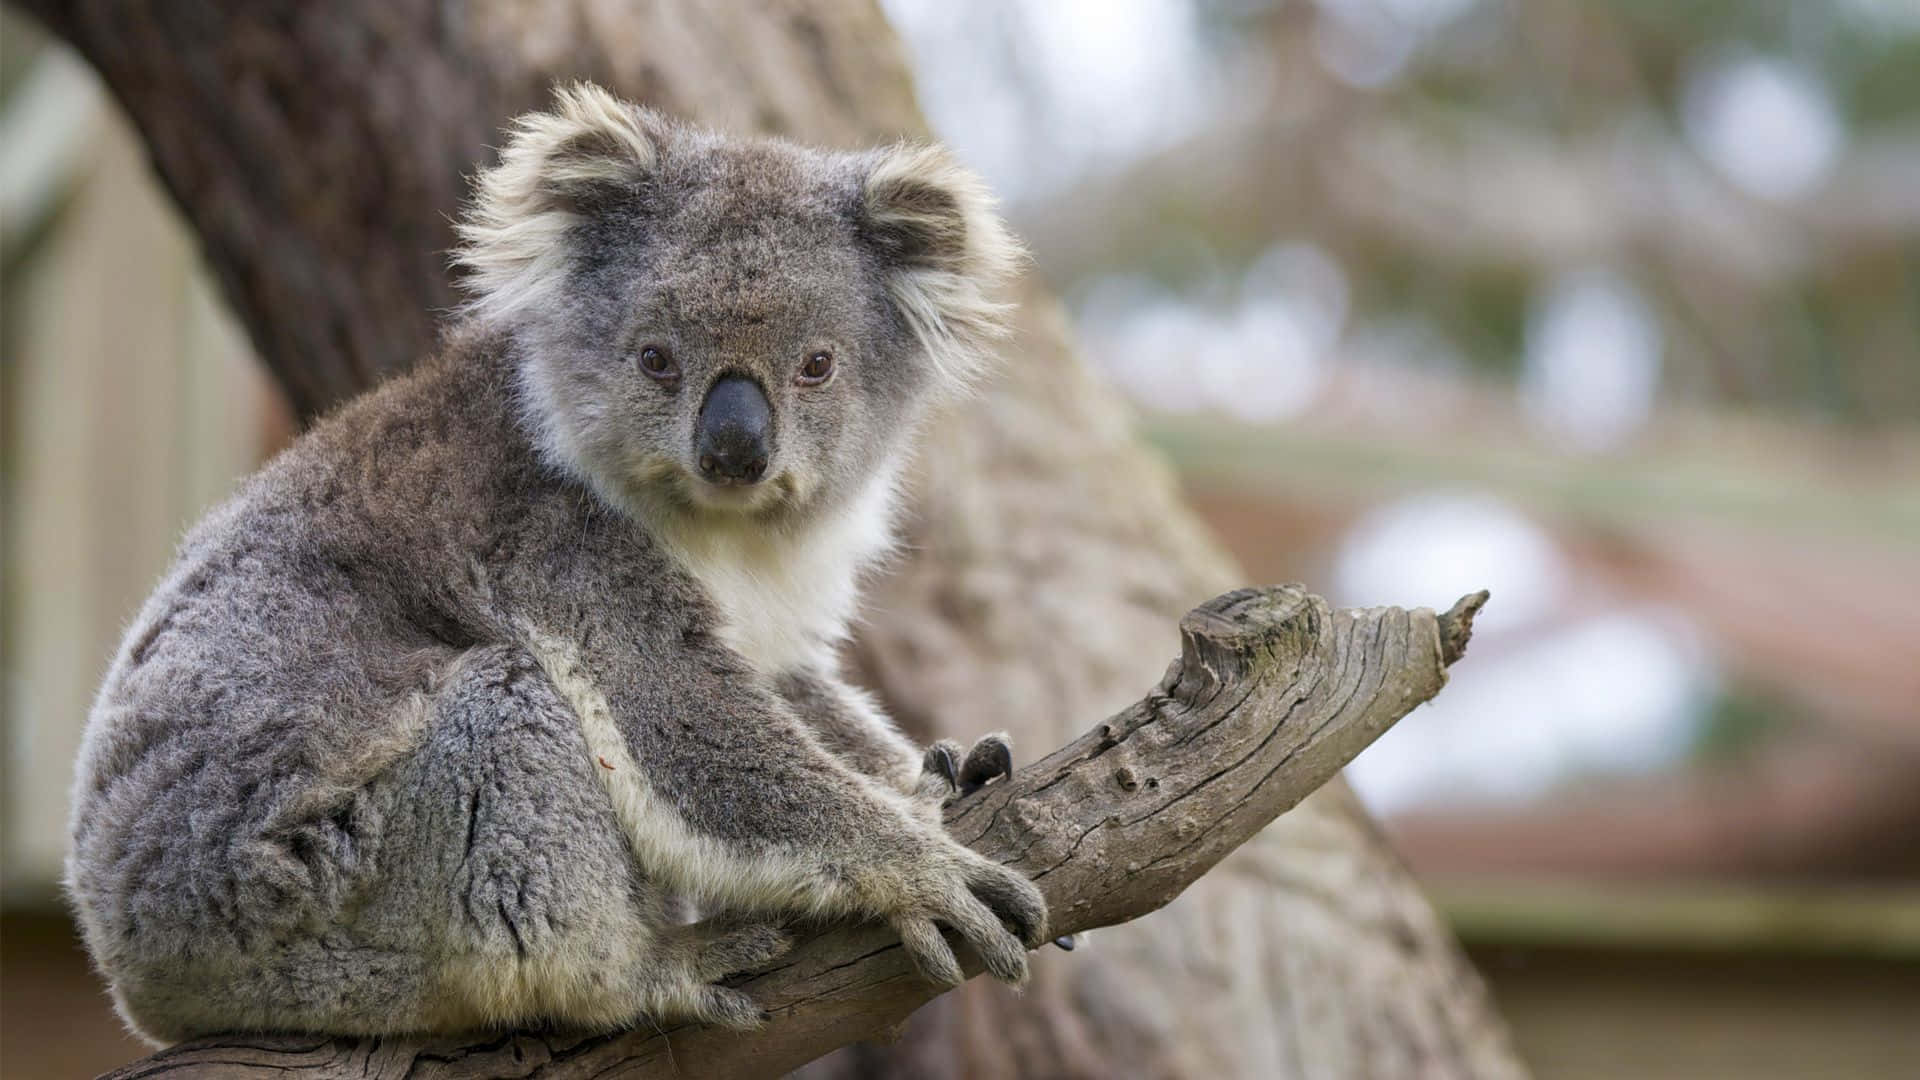 "Pensive Koala Bears Enjoying a True Australian Outback Experience"